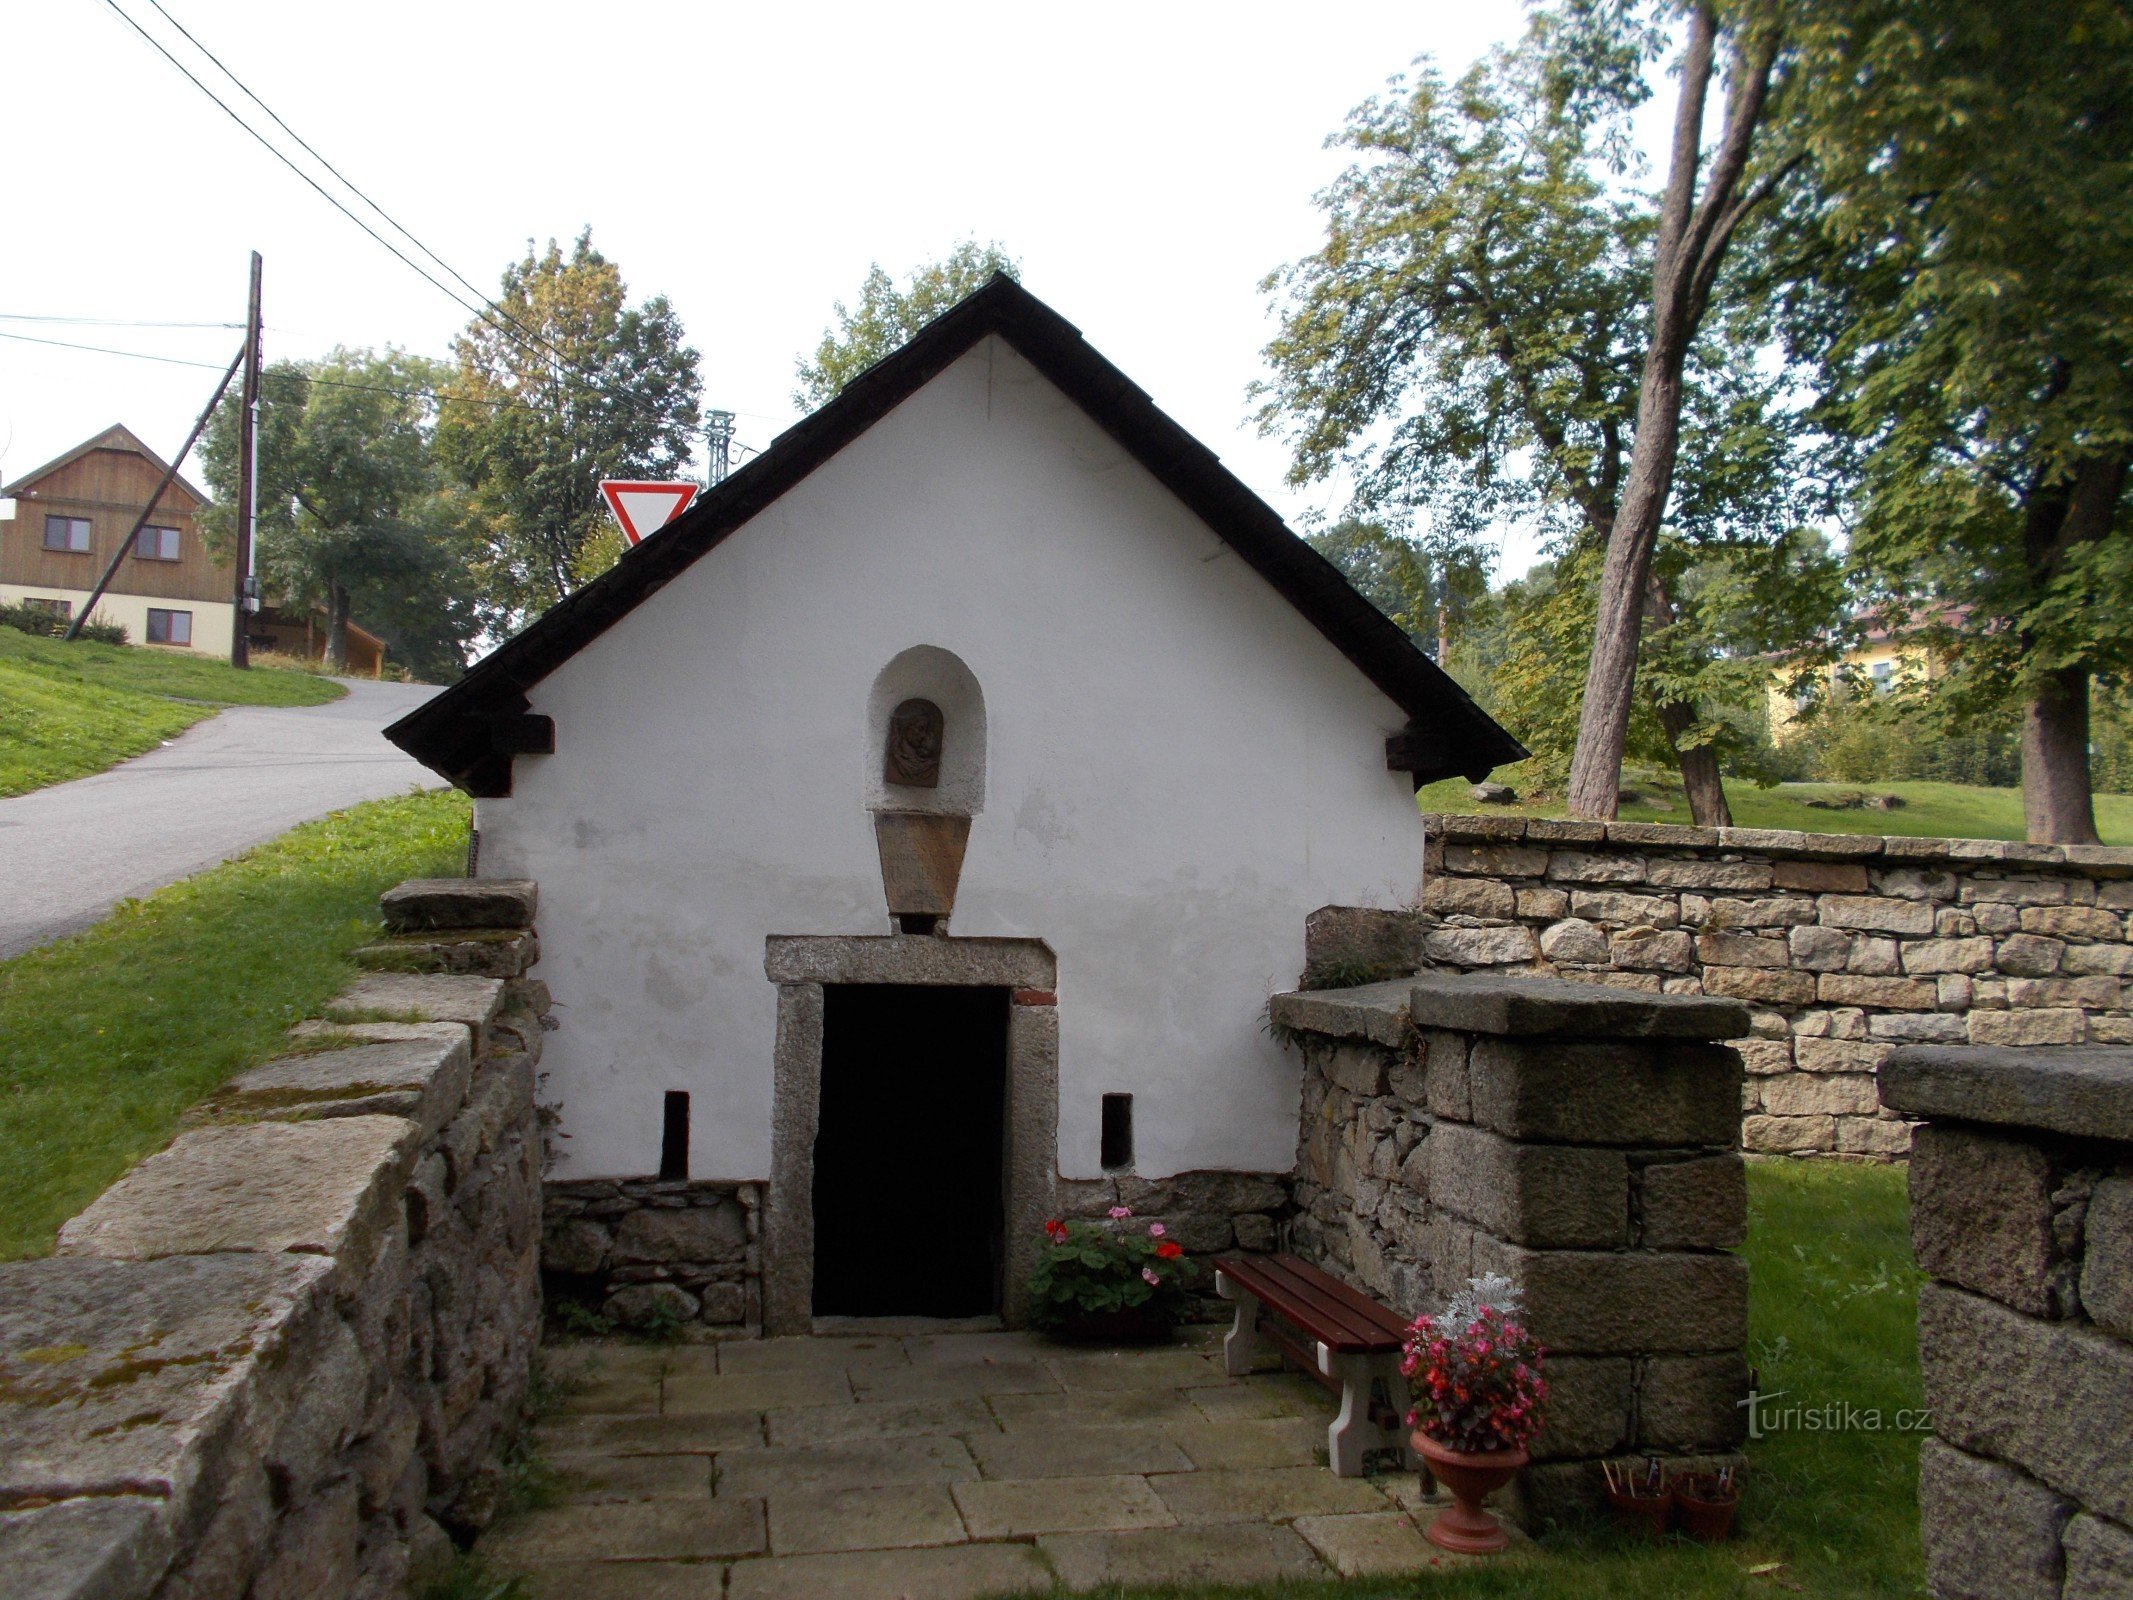 Bem perto da igreja em Krásná